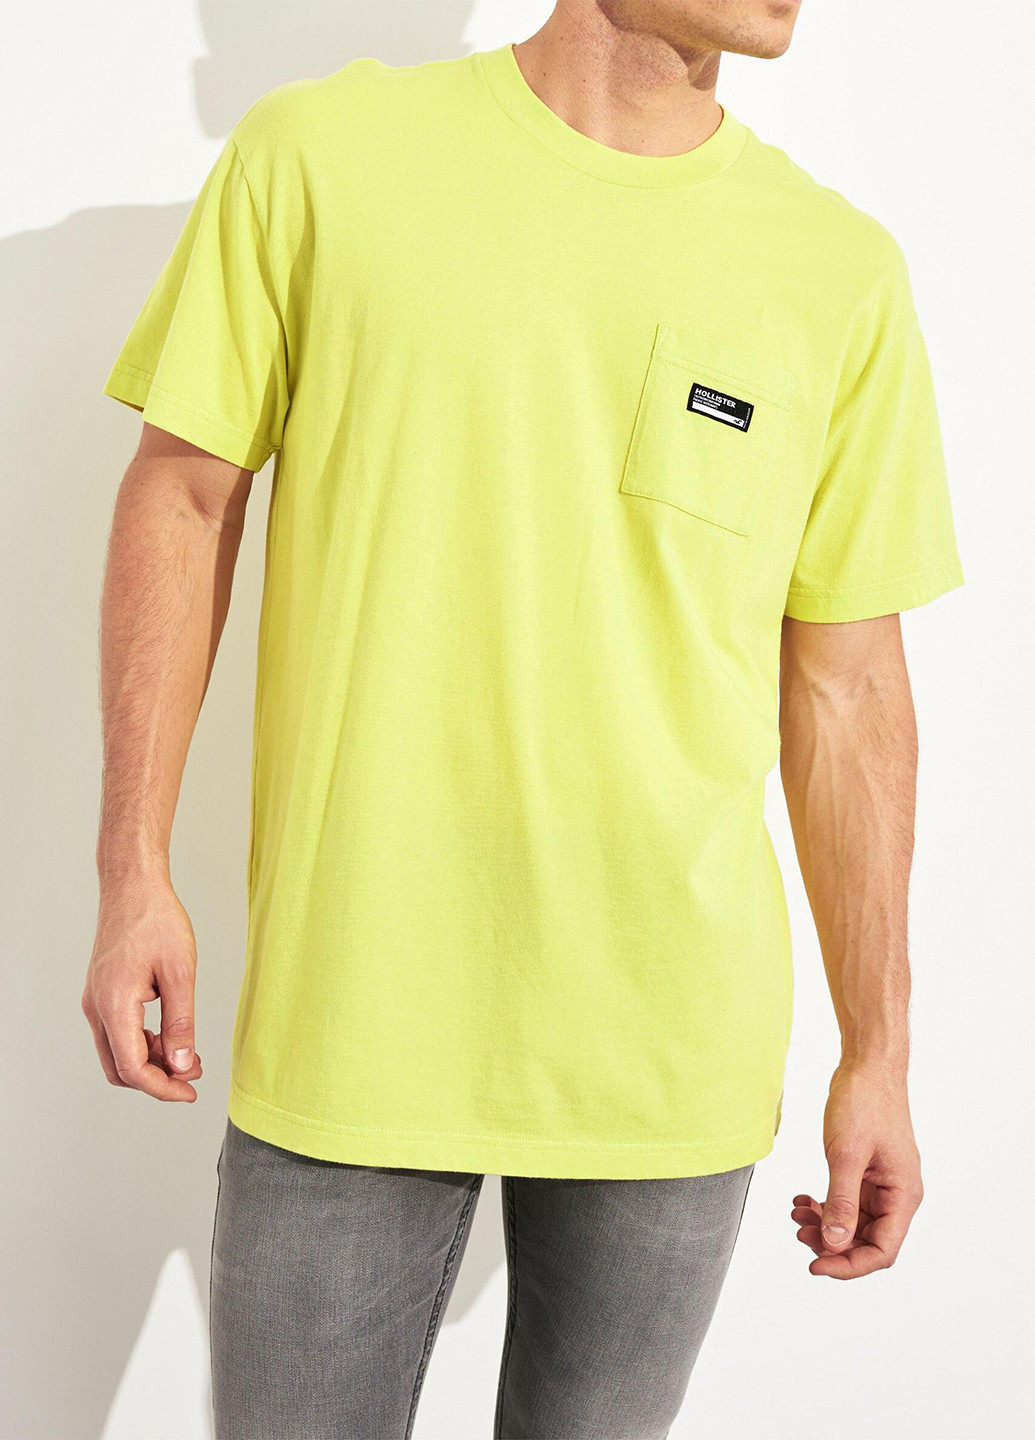 Салатовая футболка Hollister